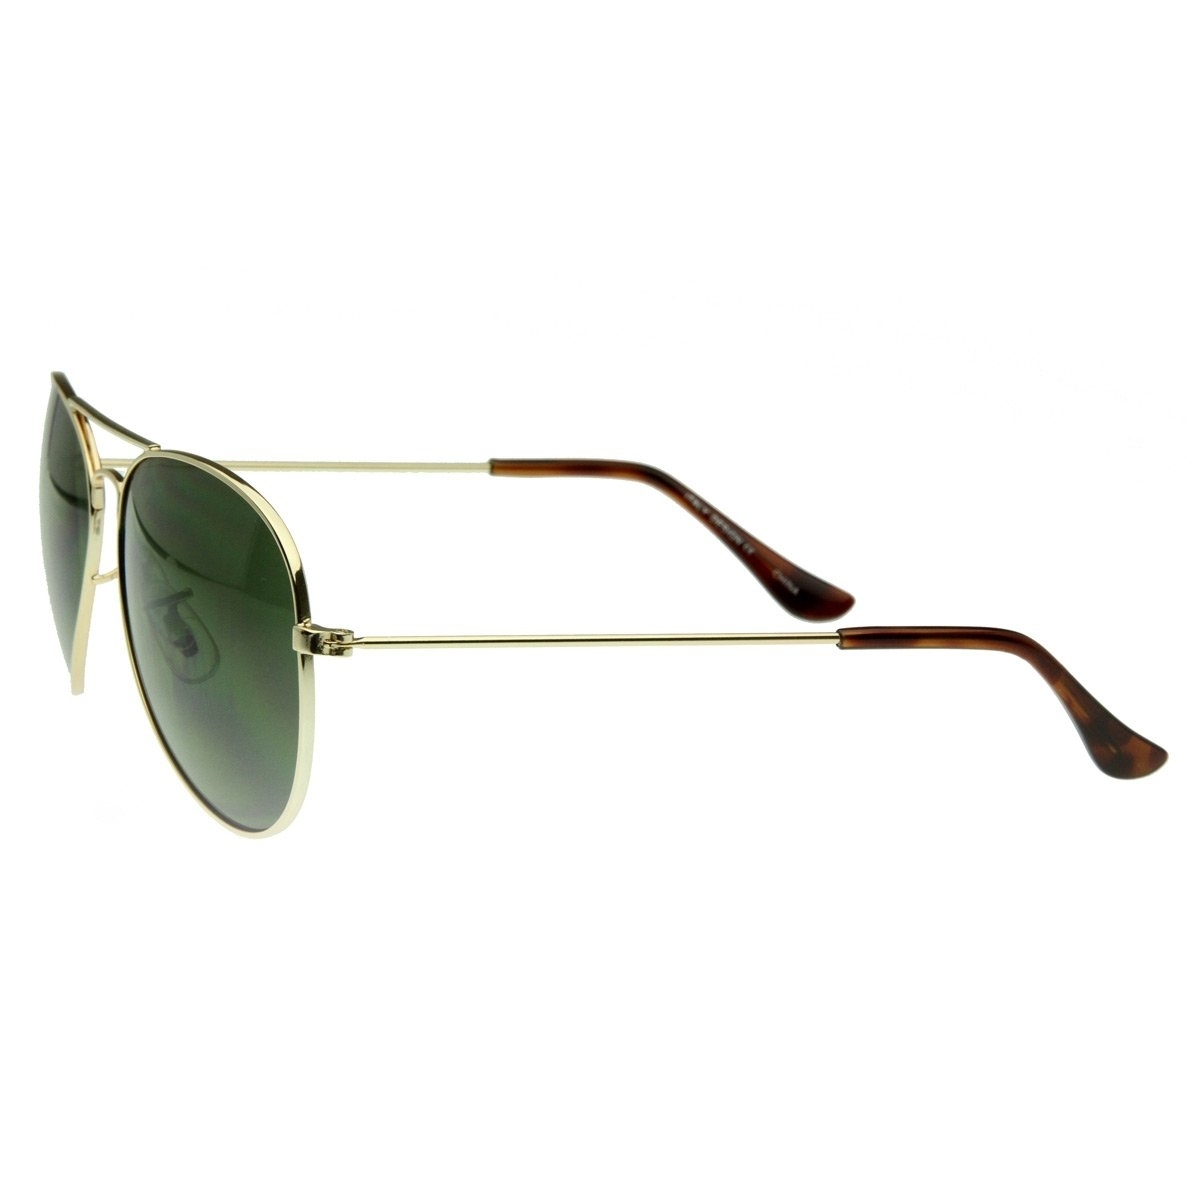 Original Classic Metal Standard Aviator Sunglasses - Nickel Plated Frame - Gold